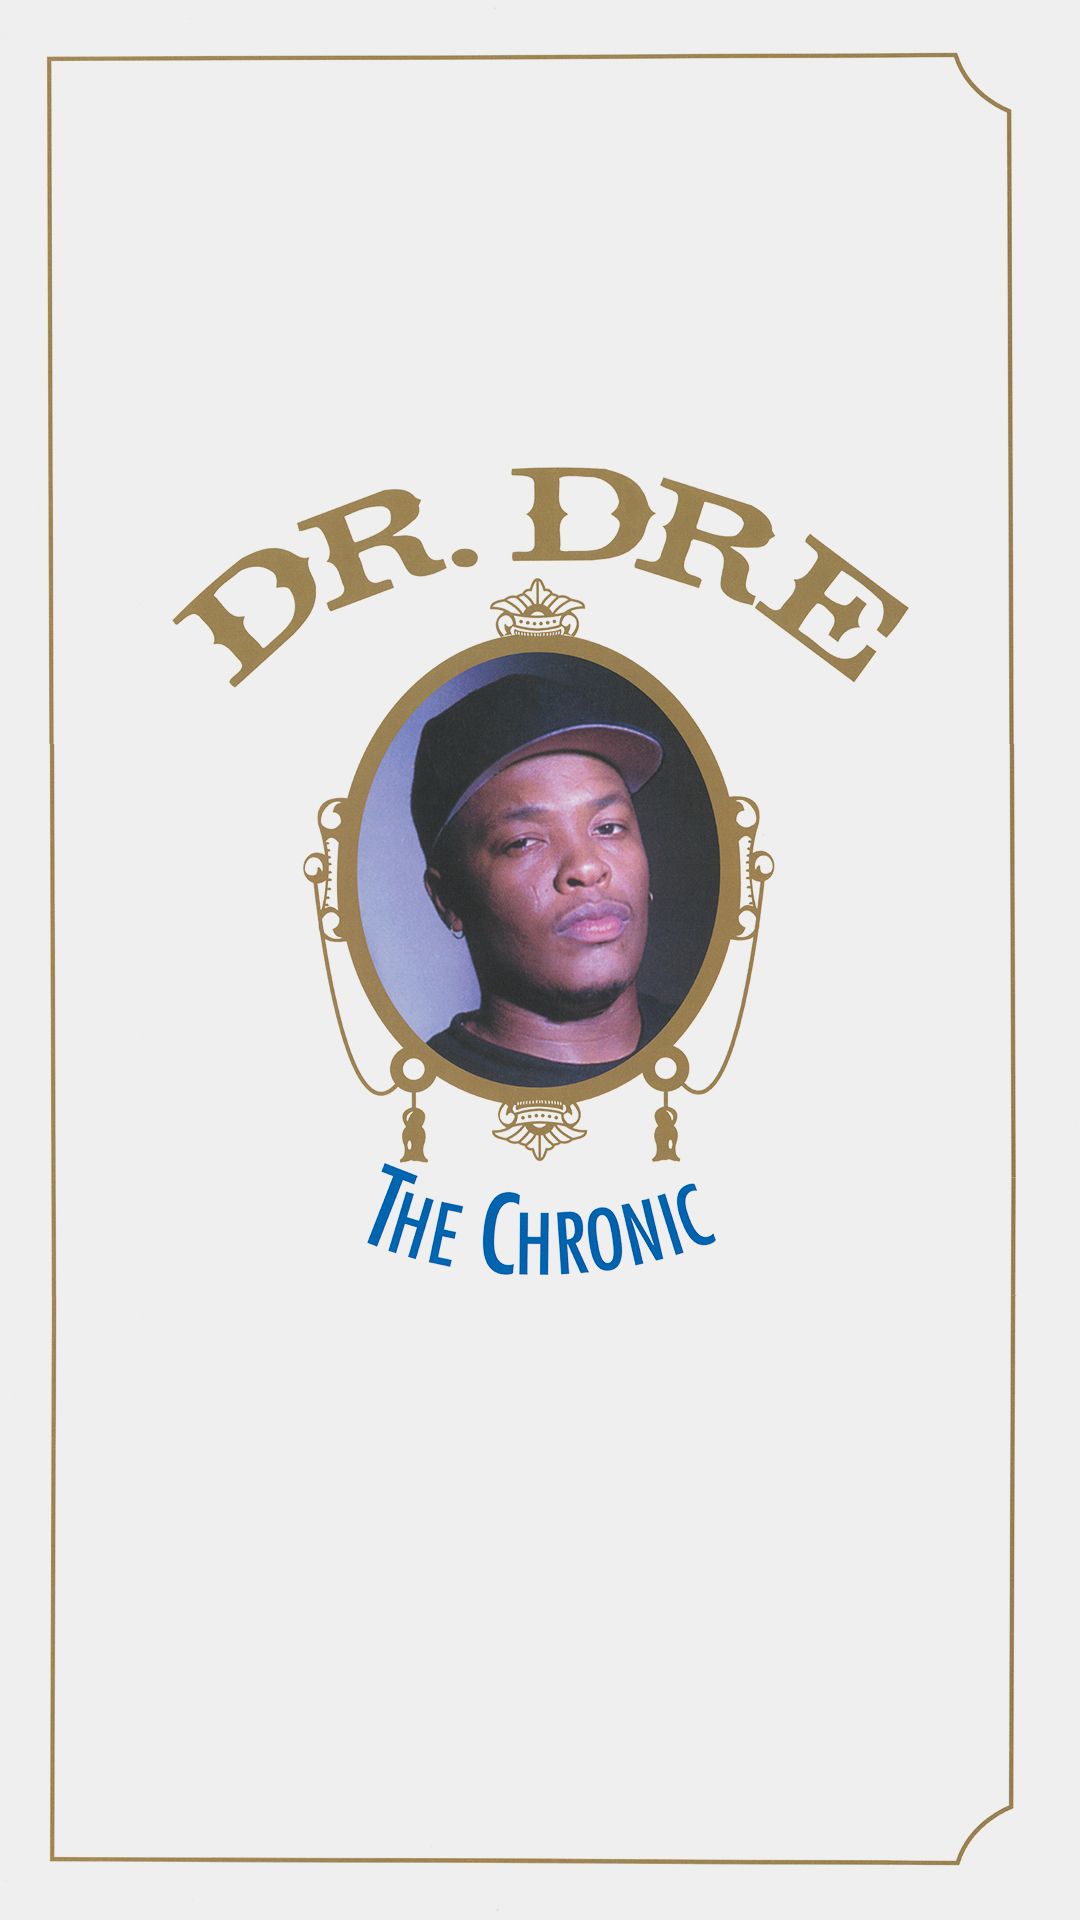 Home - Dr. Dre